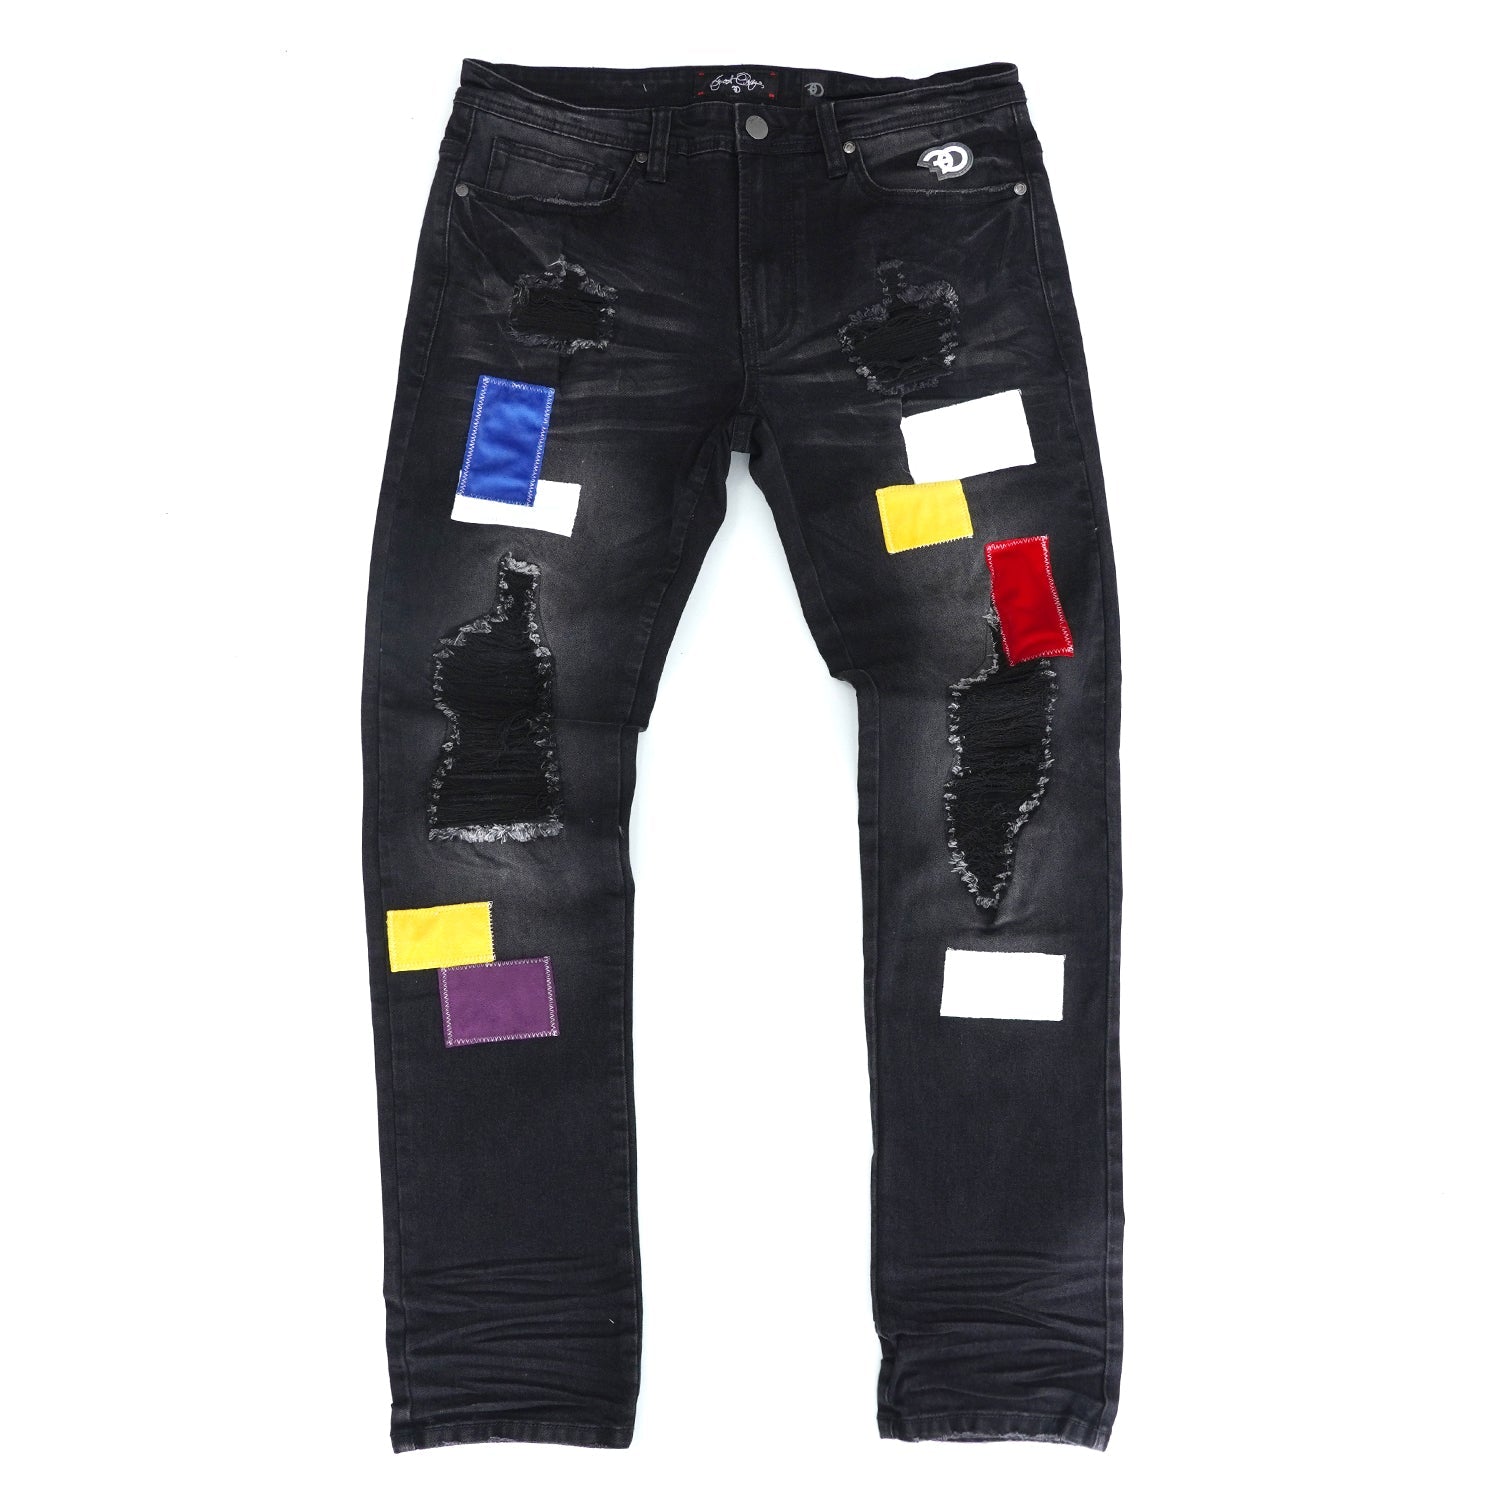 F1715 Frost Patchwork Jenim Shredded Jeans - Black Wash